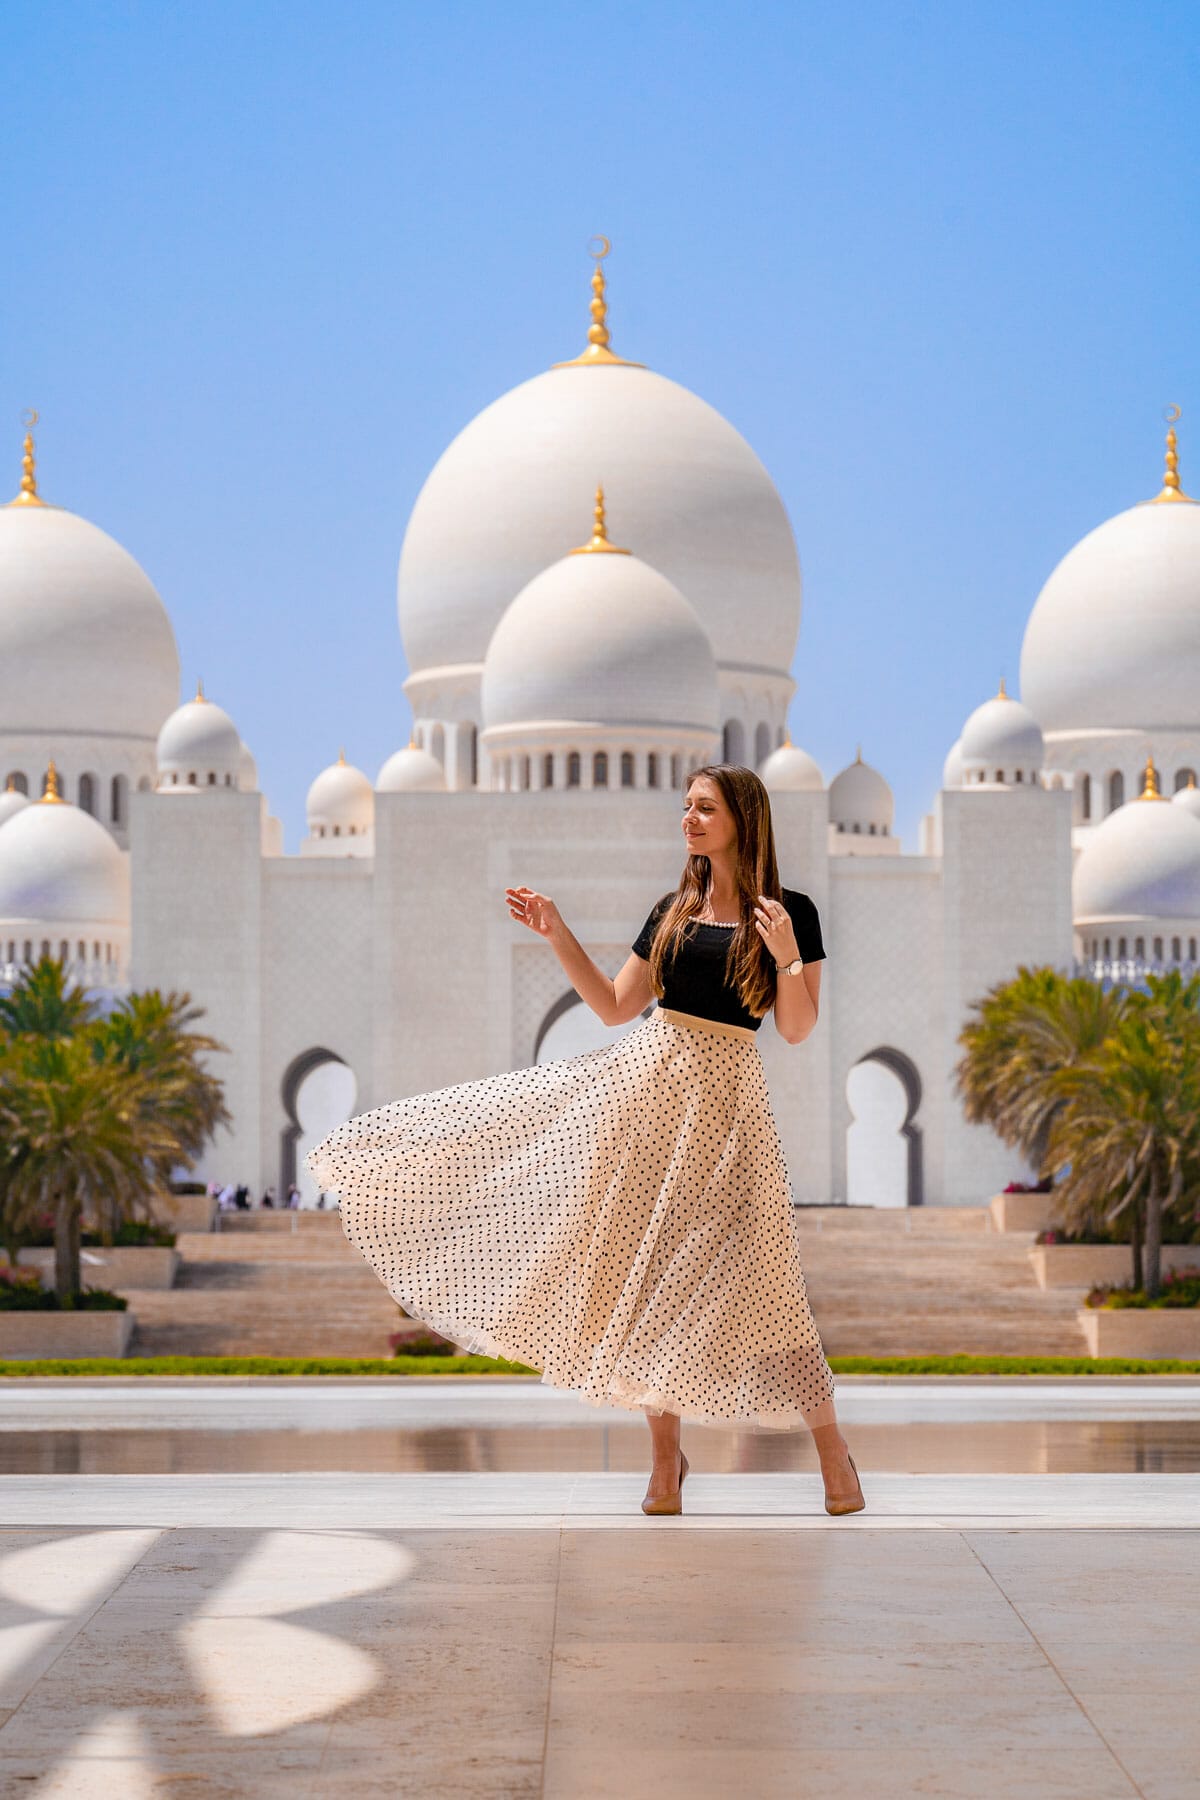 Girl at Wahat al Karama overlooking the Grand Mosque in Abu Dhabi